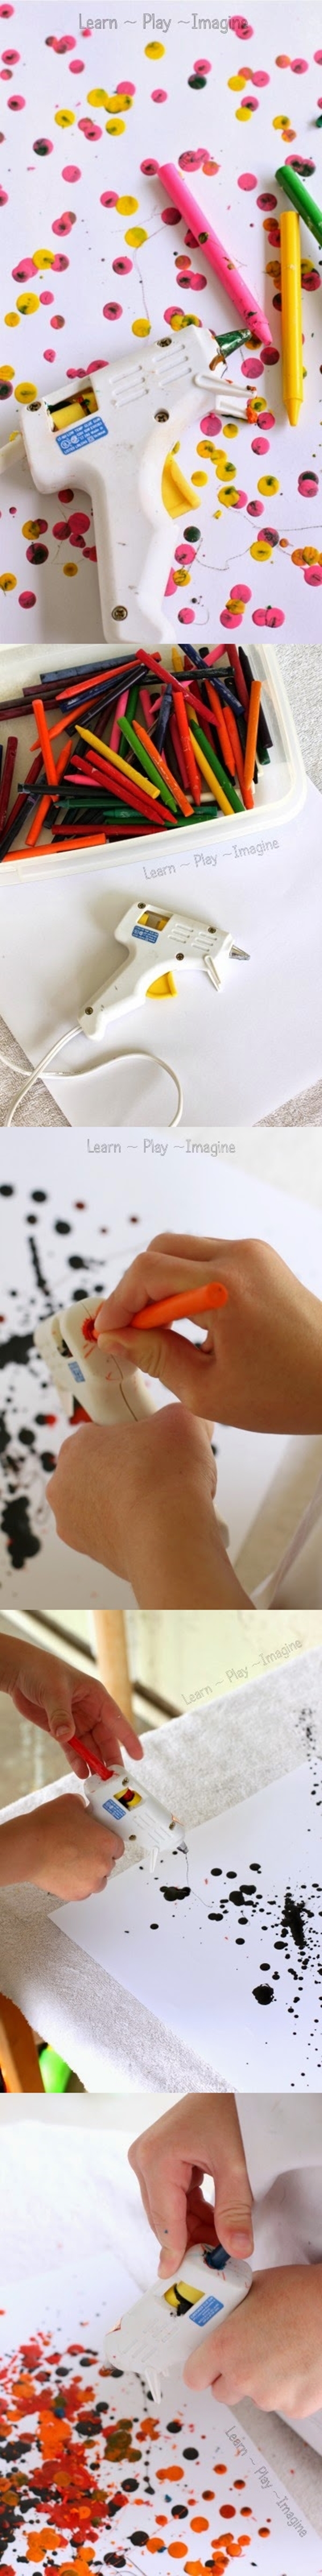 make-paint-crayons-glue